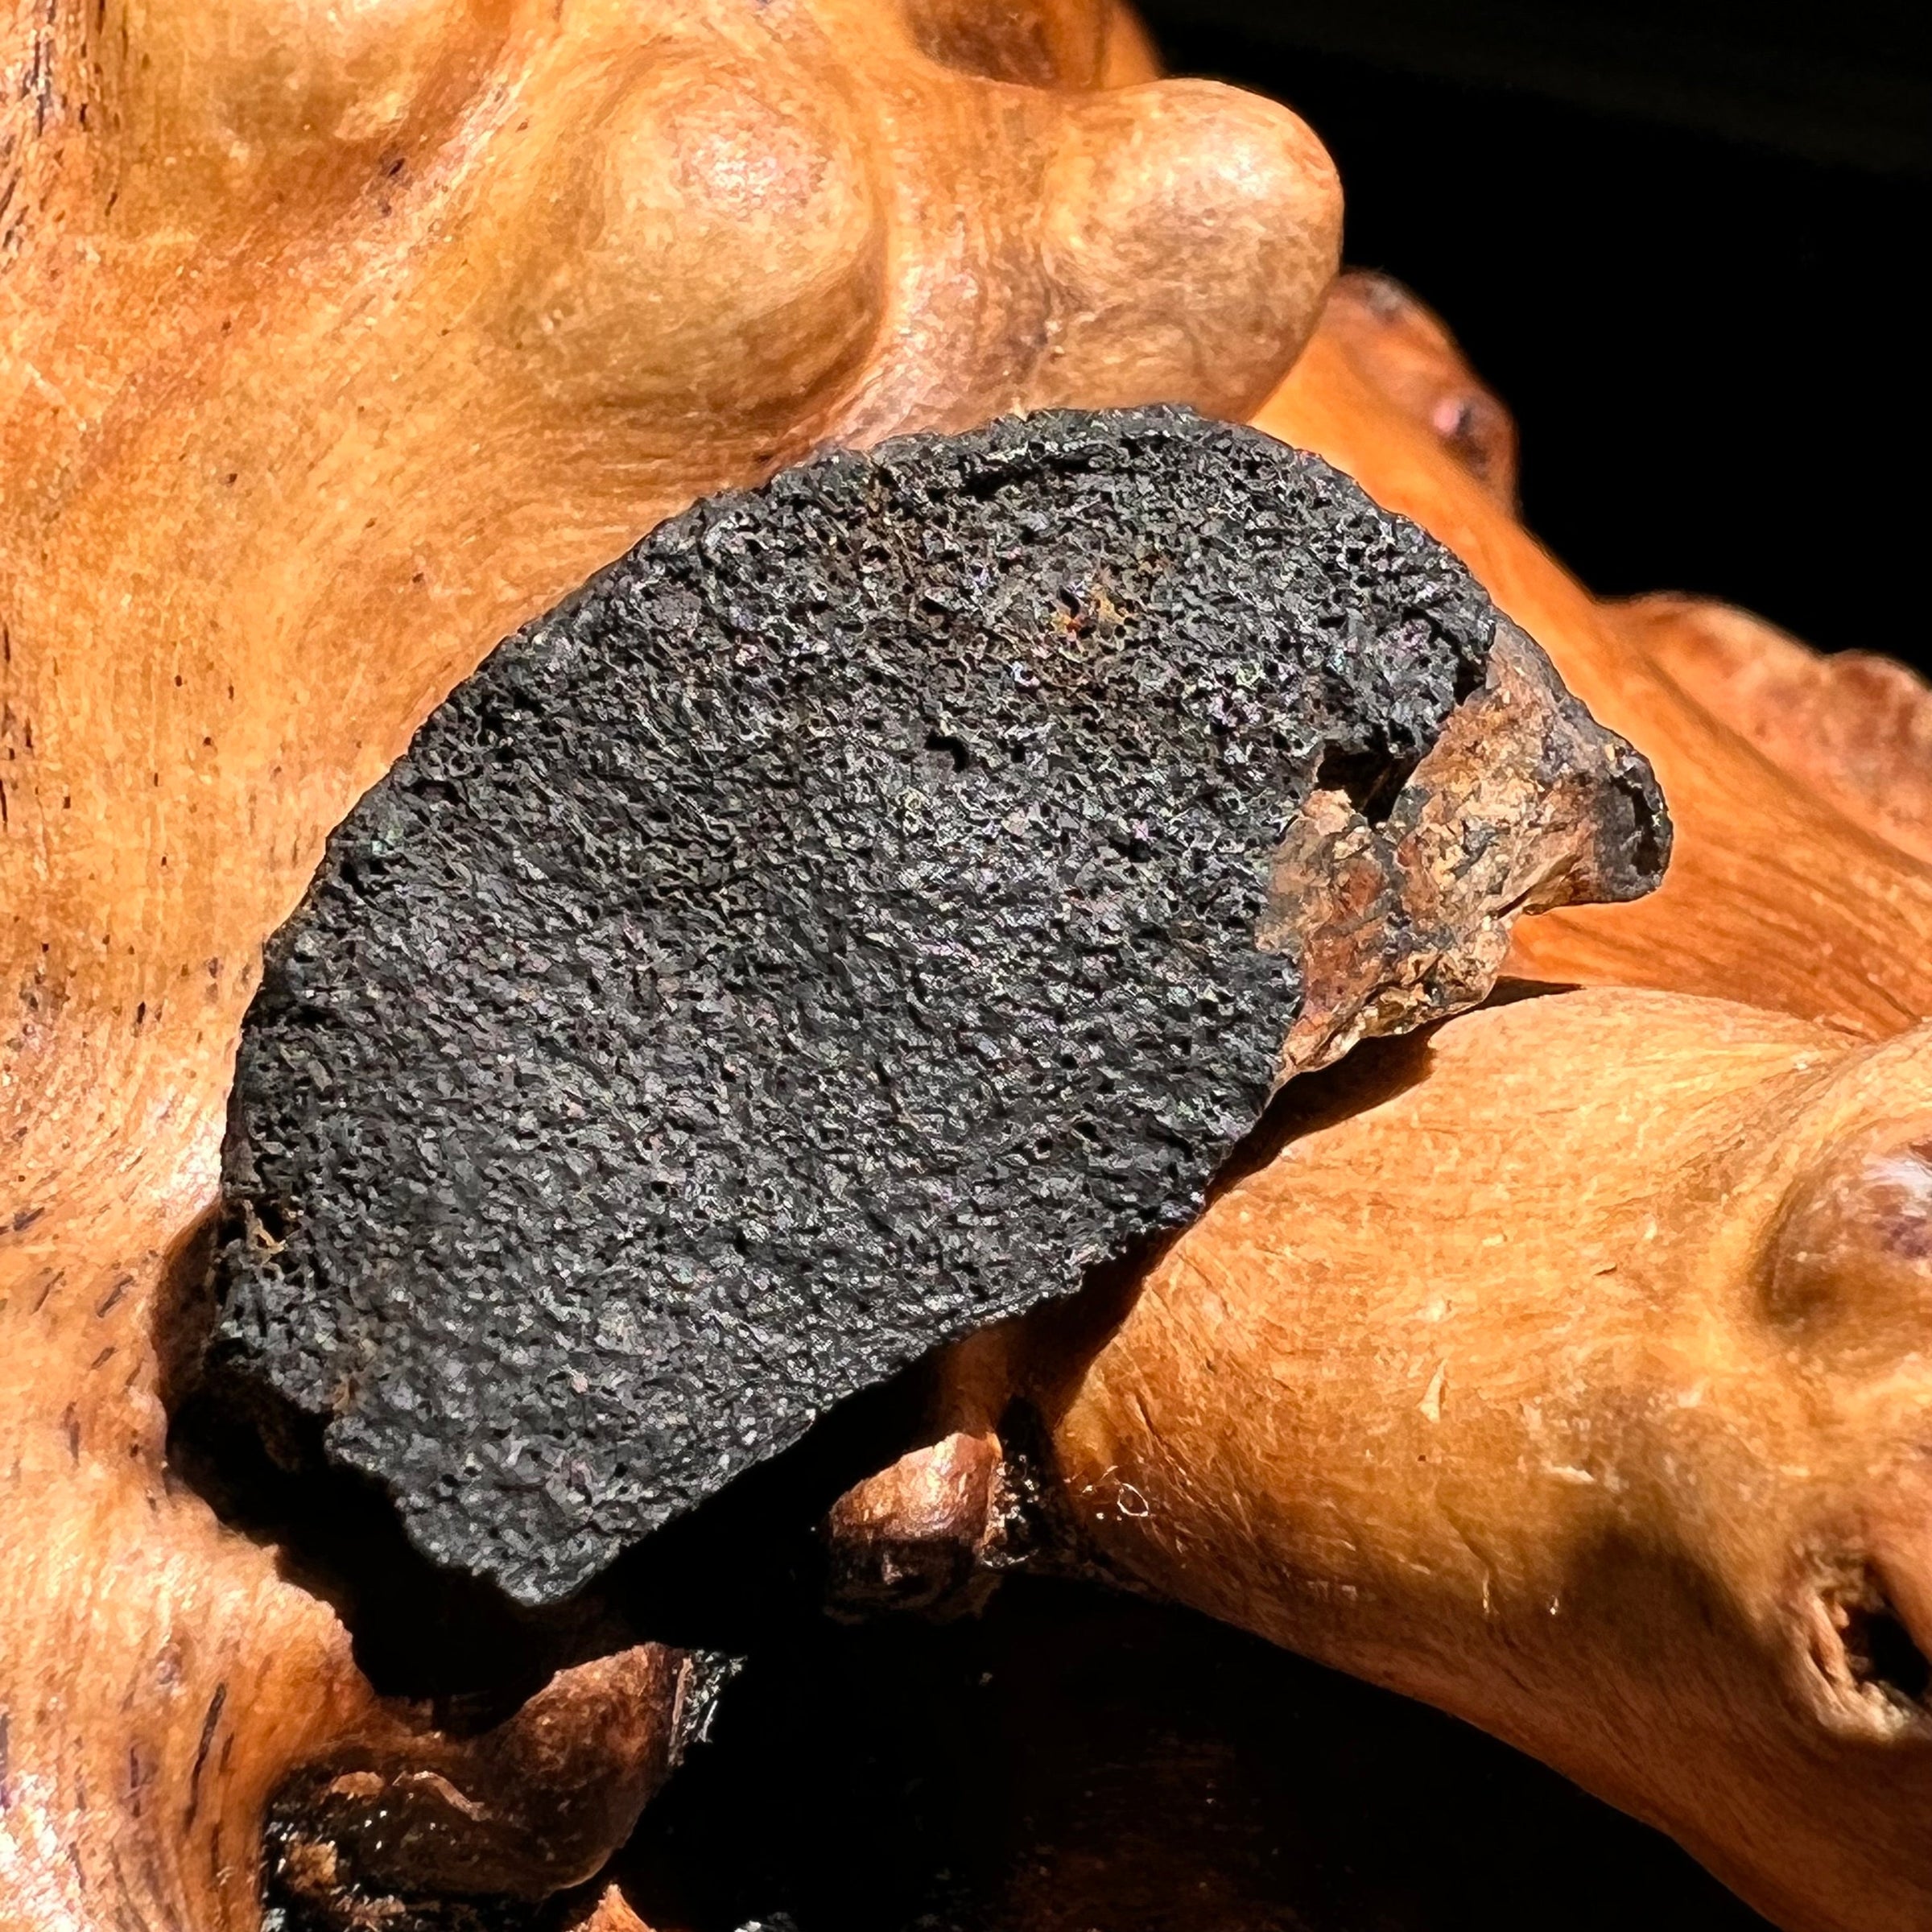 Chelyabinsk Meteorite Superbolide Asteroid 3.9 grams #12-Moldavite Life